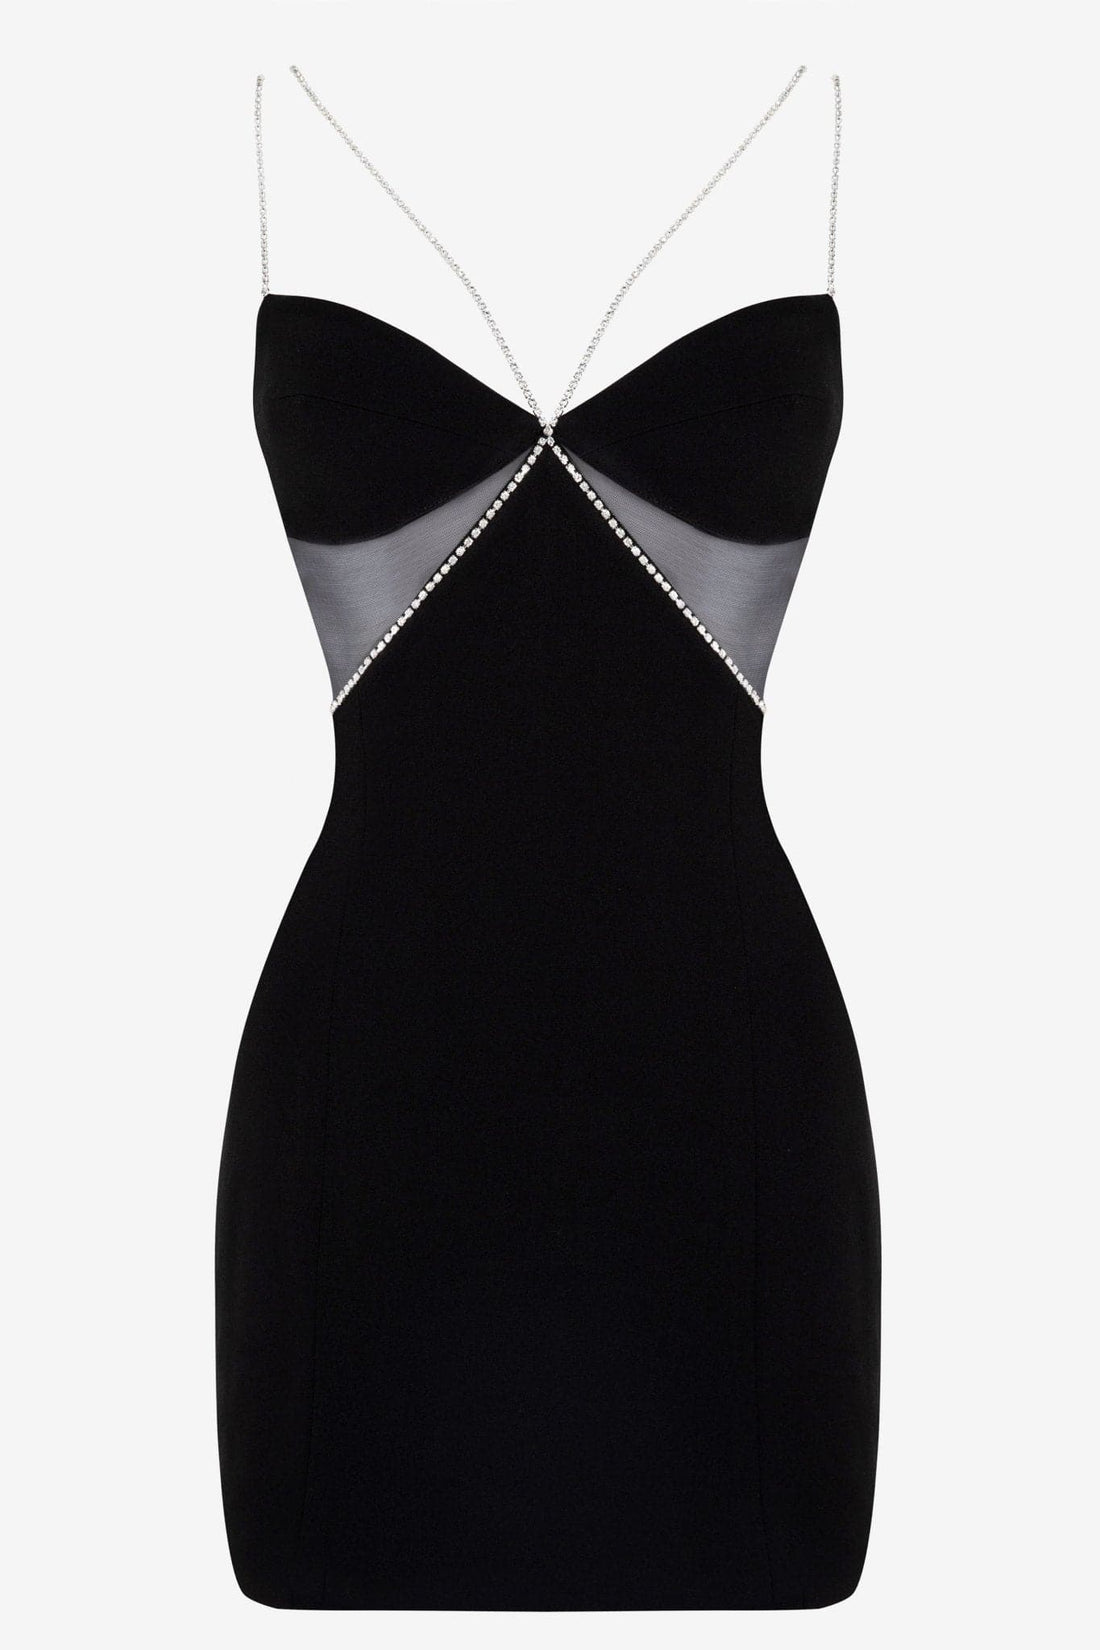 Heiress Beverly Hills Black Lace Corset Draped Mini Dress - Black 2XL